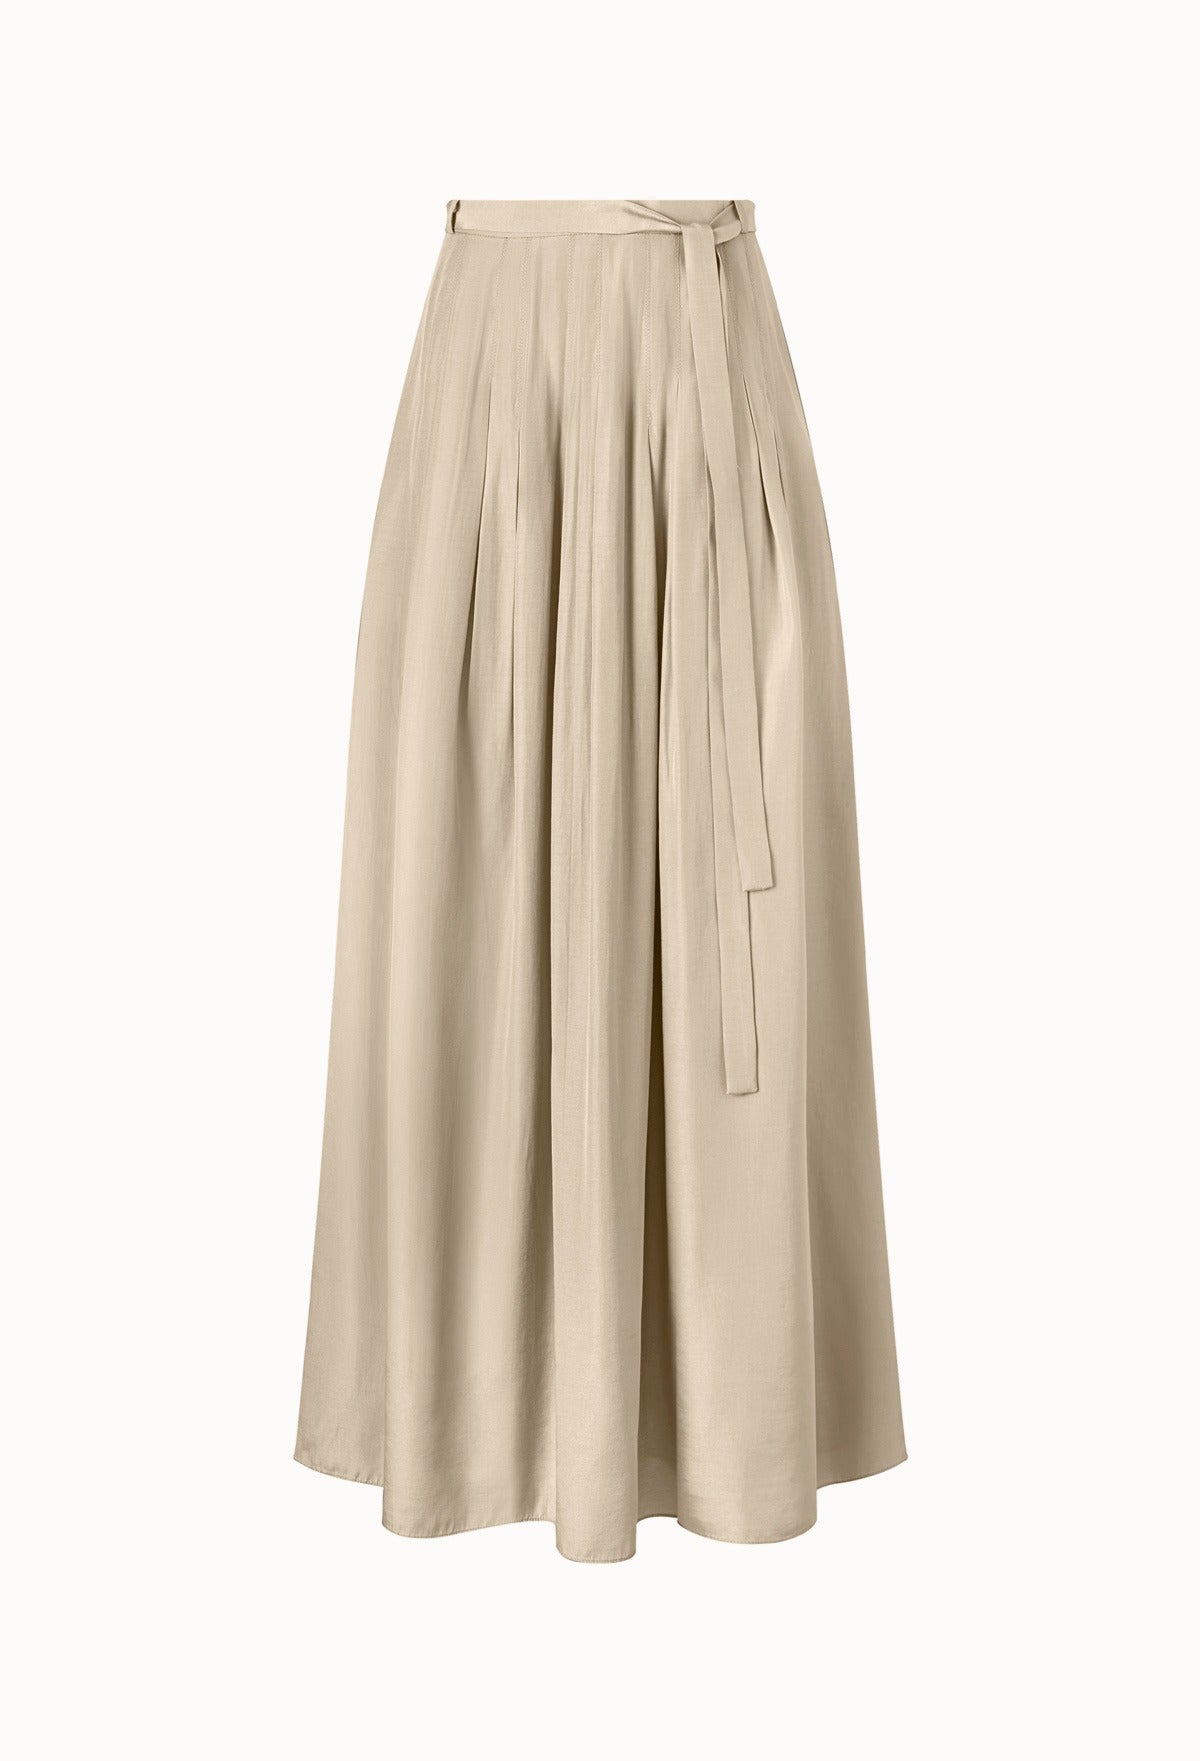 Vintage Satin Skirt In Beige